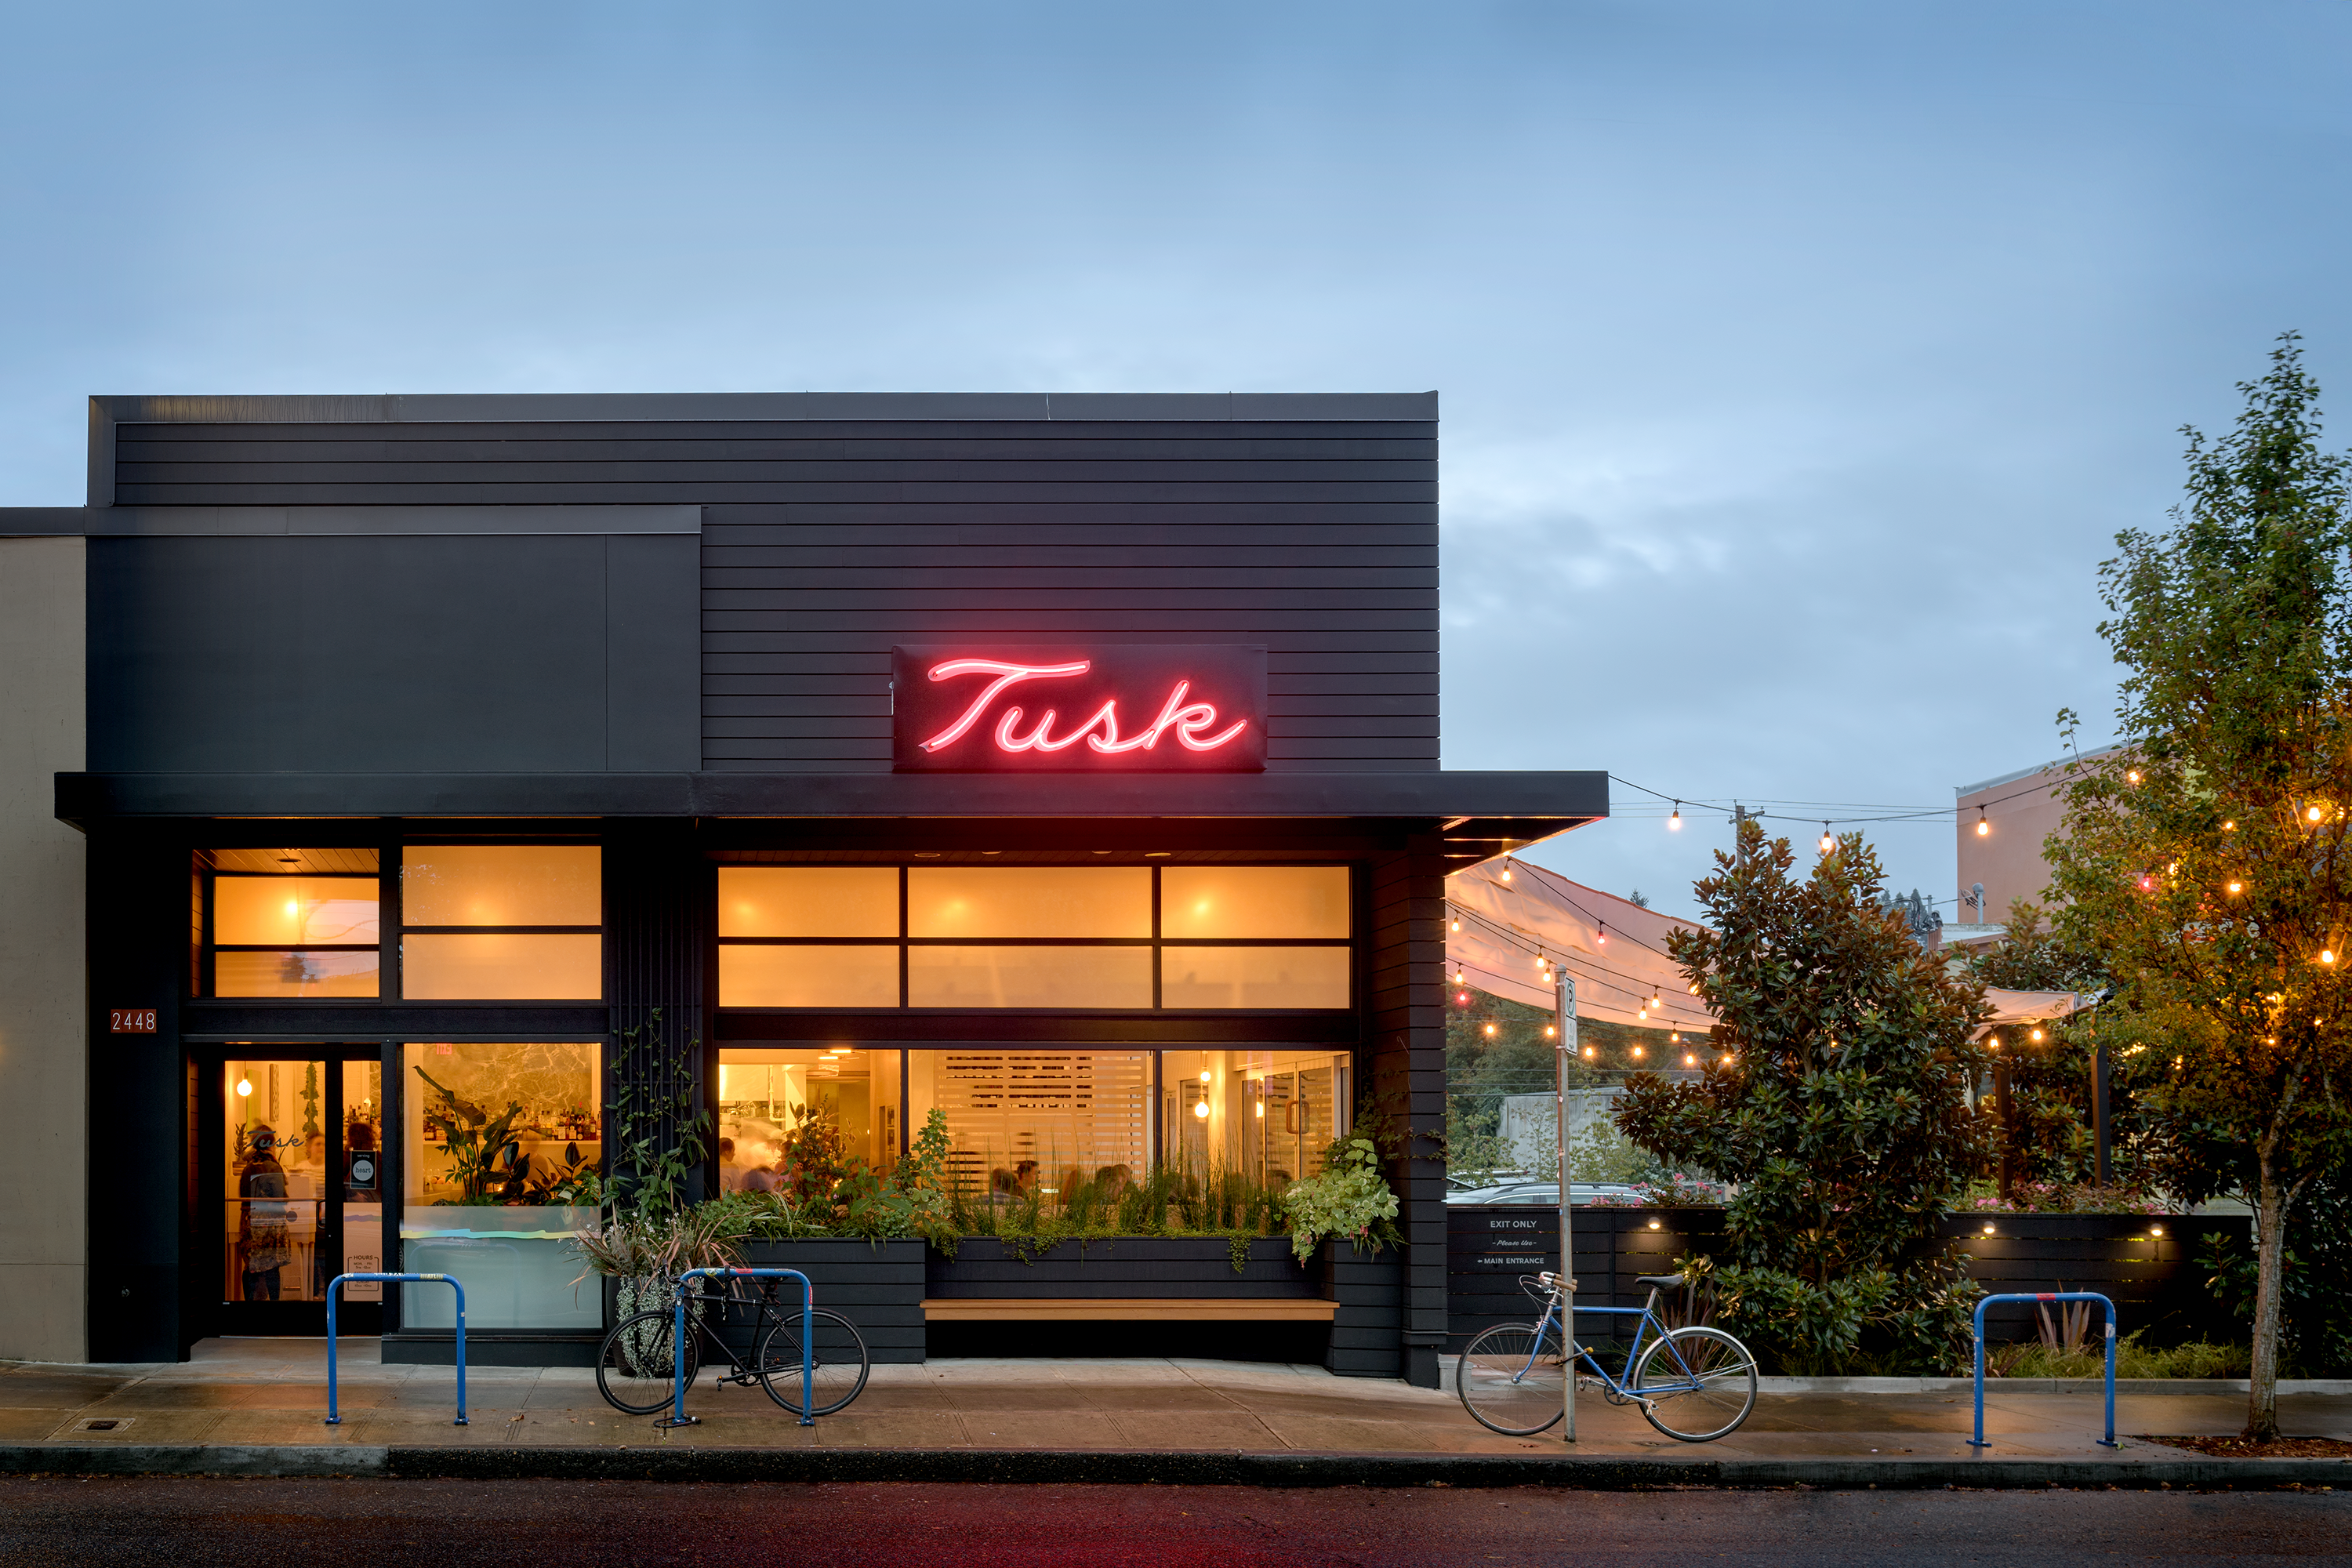 Tusk restaurant exterior